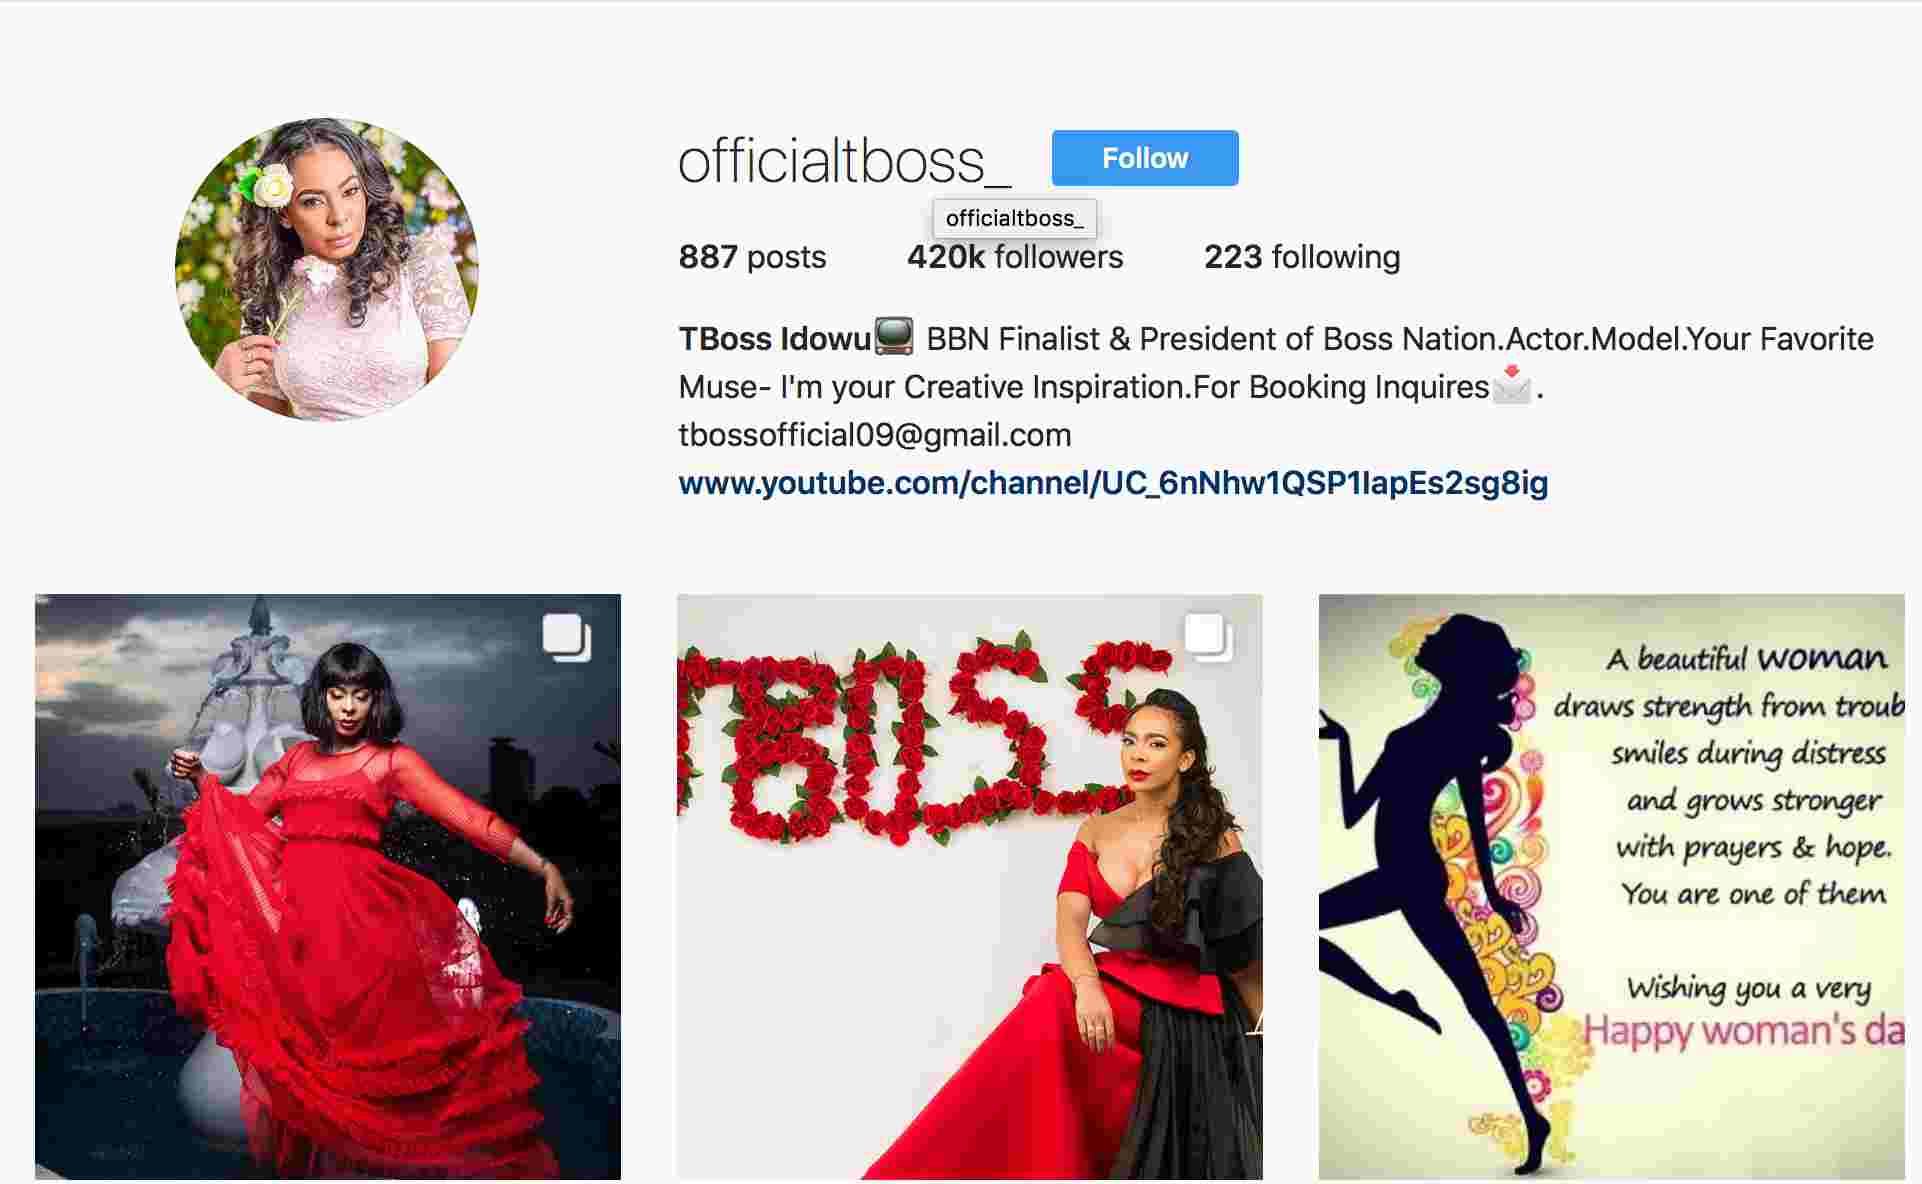 #BBNaija: Bisola hits 1 million followers on Instagram